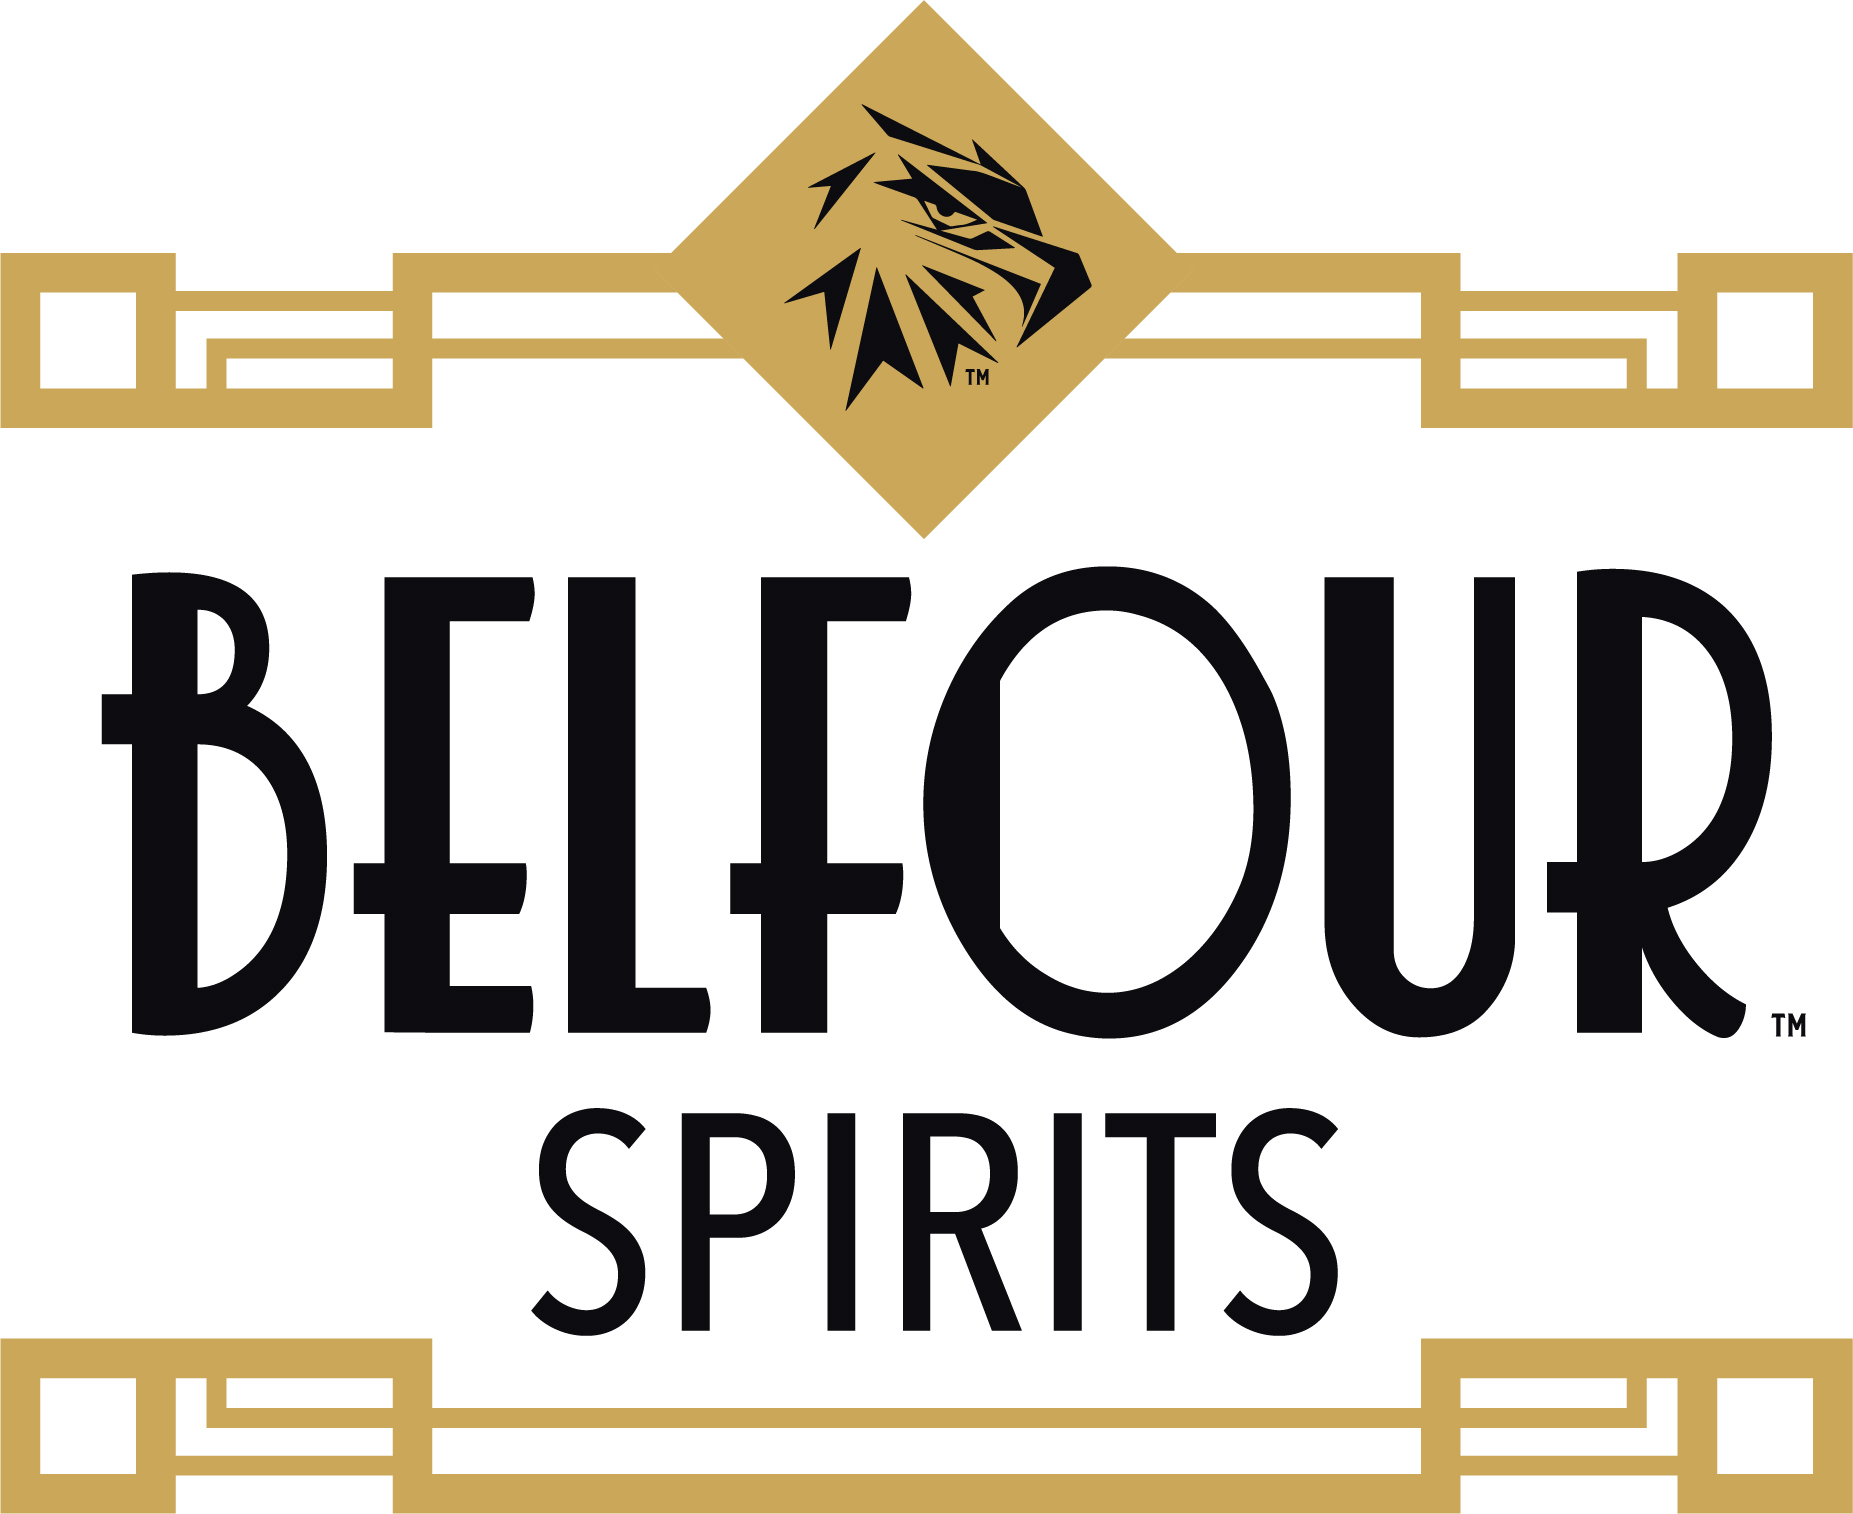 Ed Belfour - President and CEO - Belfour Spirits